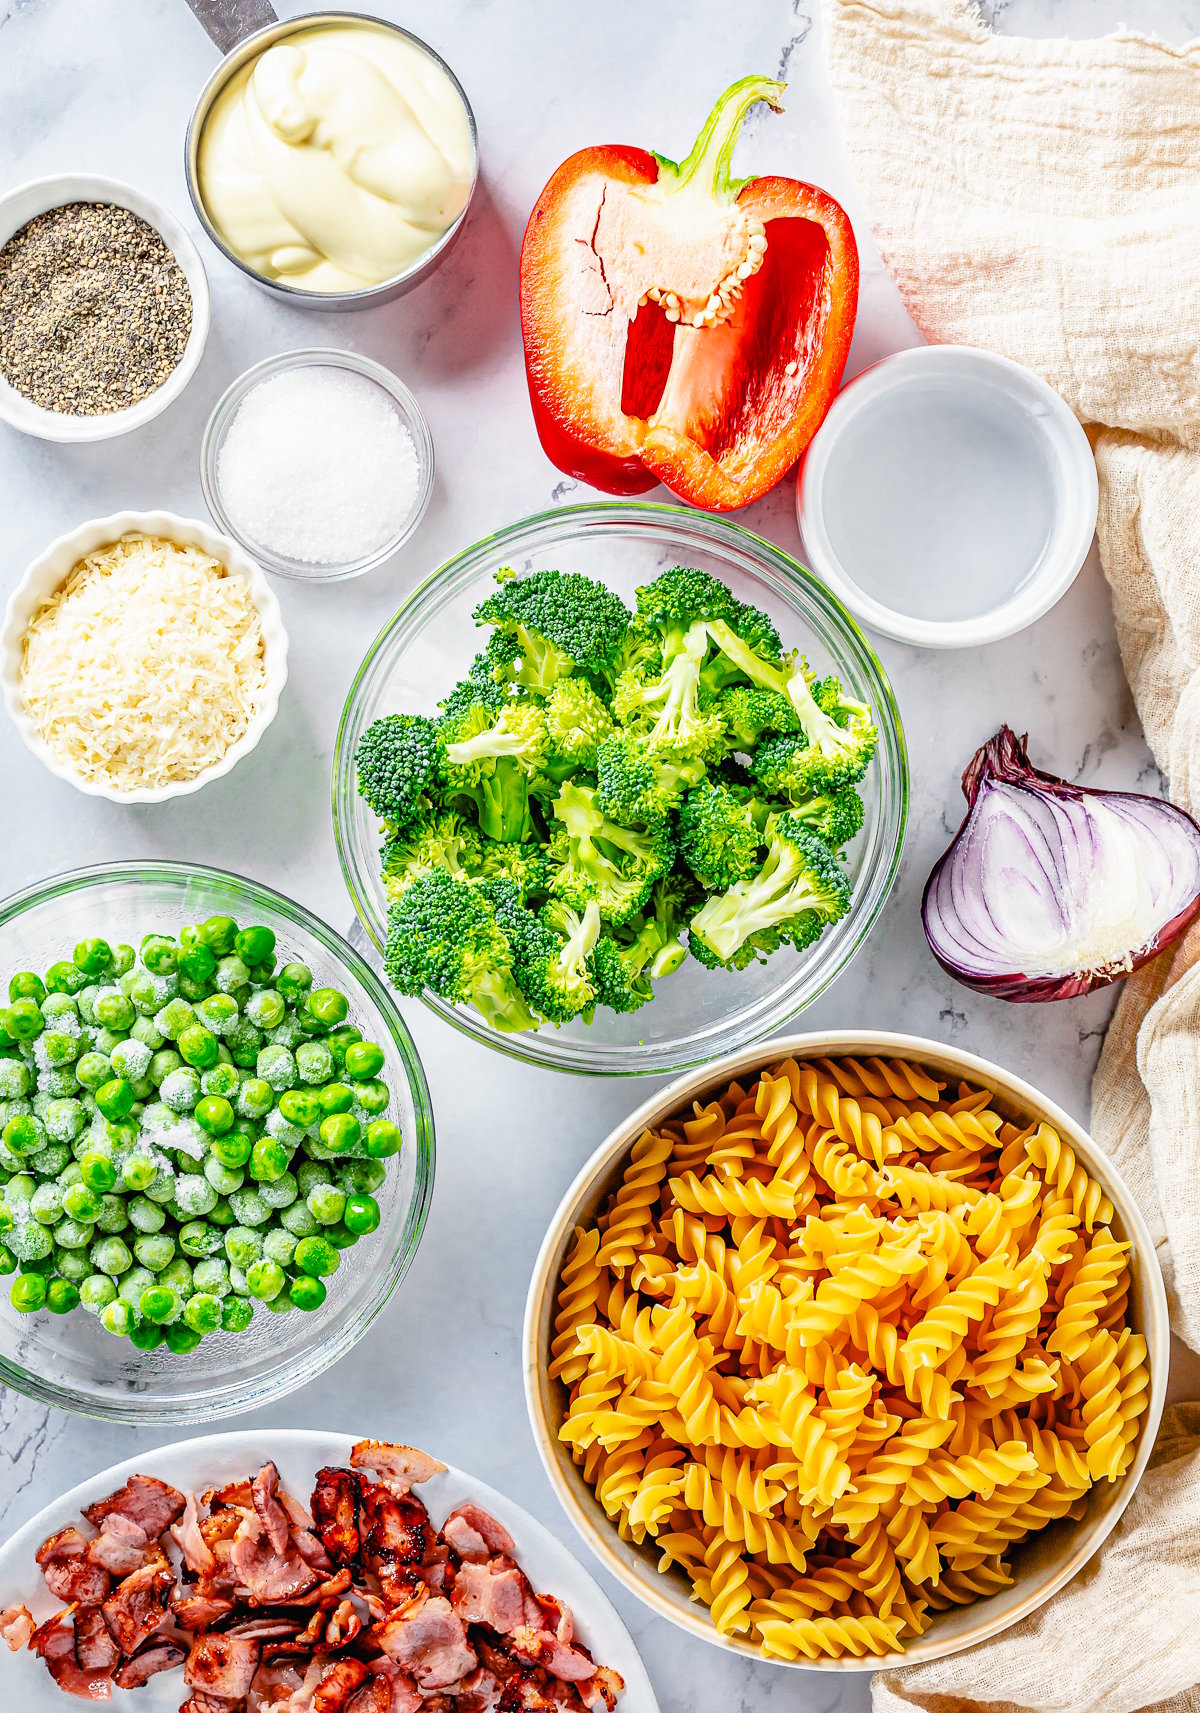 Ingredients needed to make Broccoli Pasta Salad